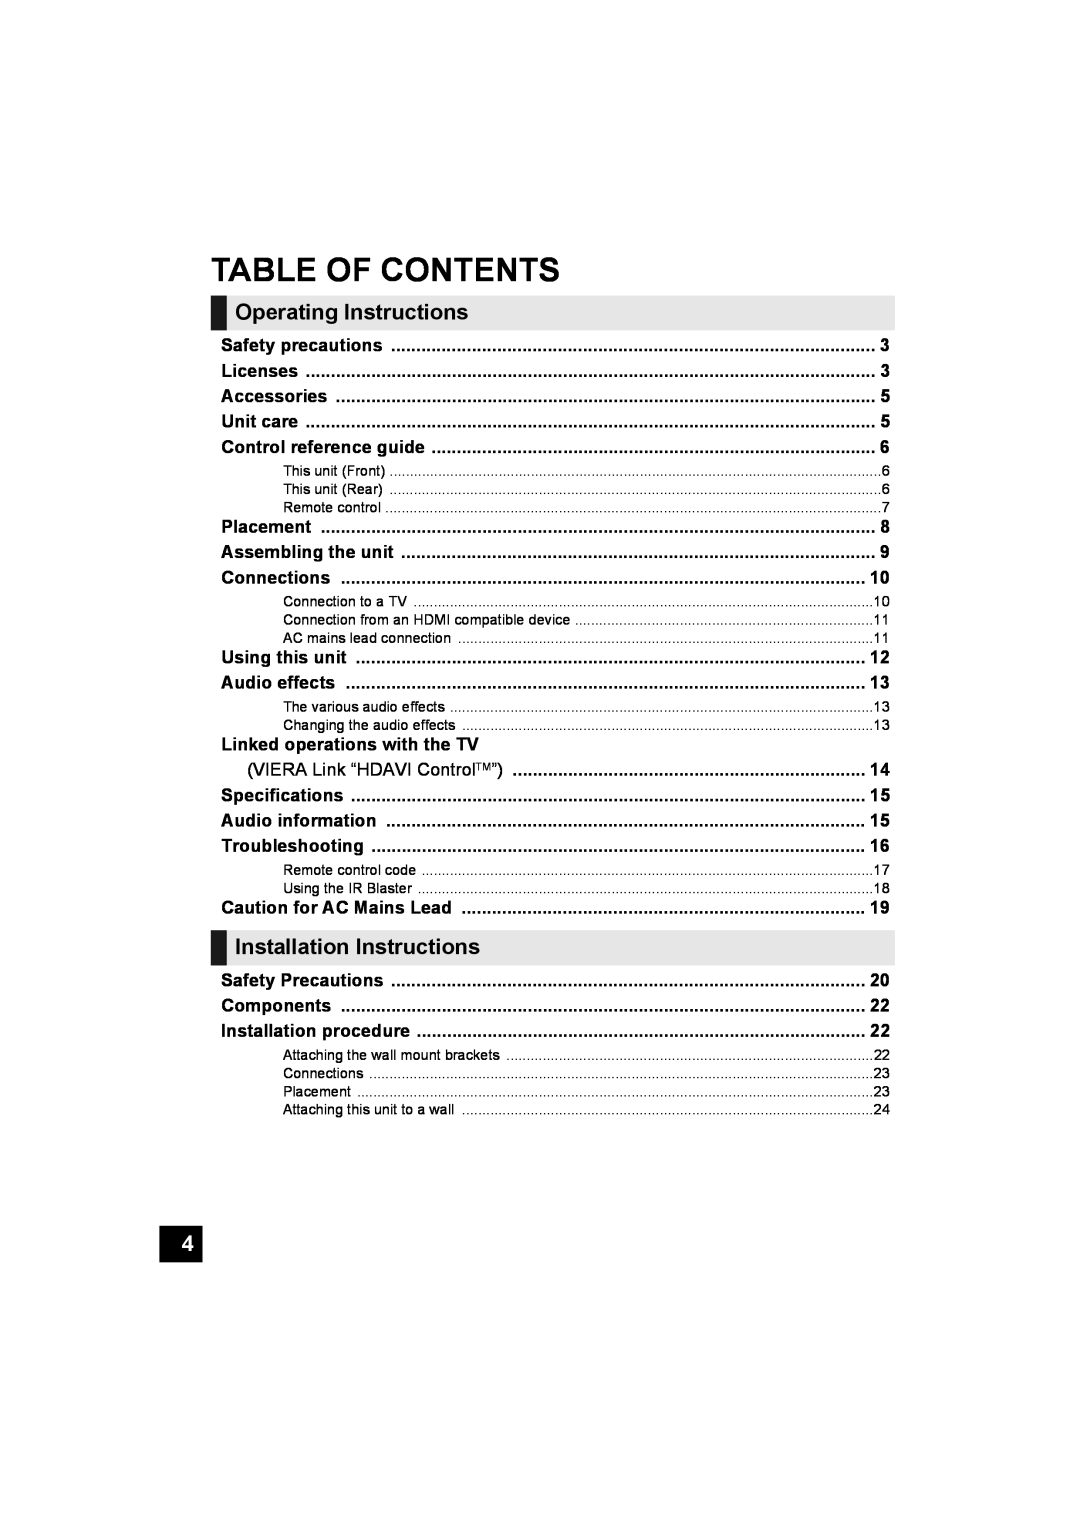 Panasonic SC-HTB10 operating instructions Table Of Contents, Operating Instructions, Installation Instructions 